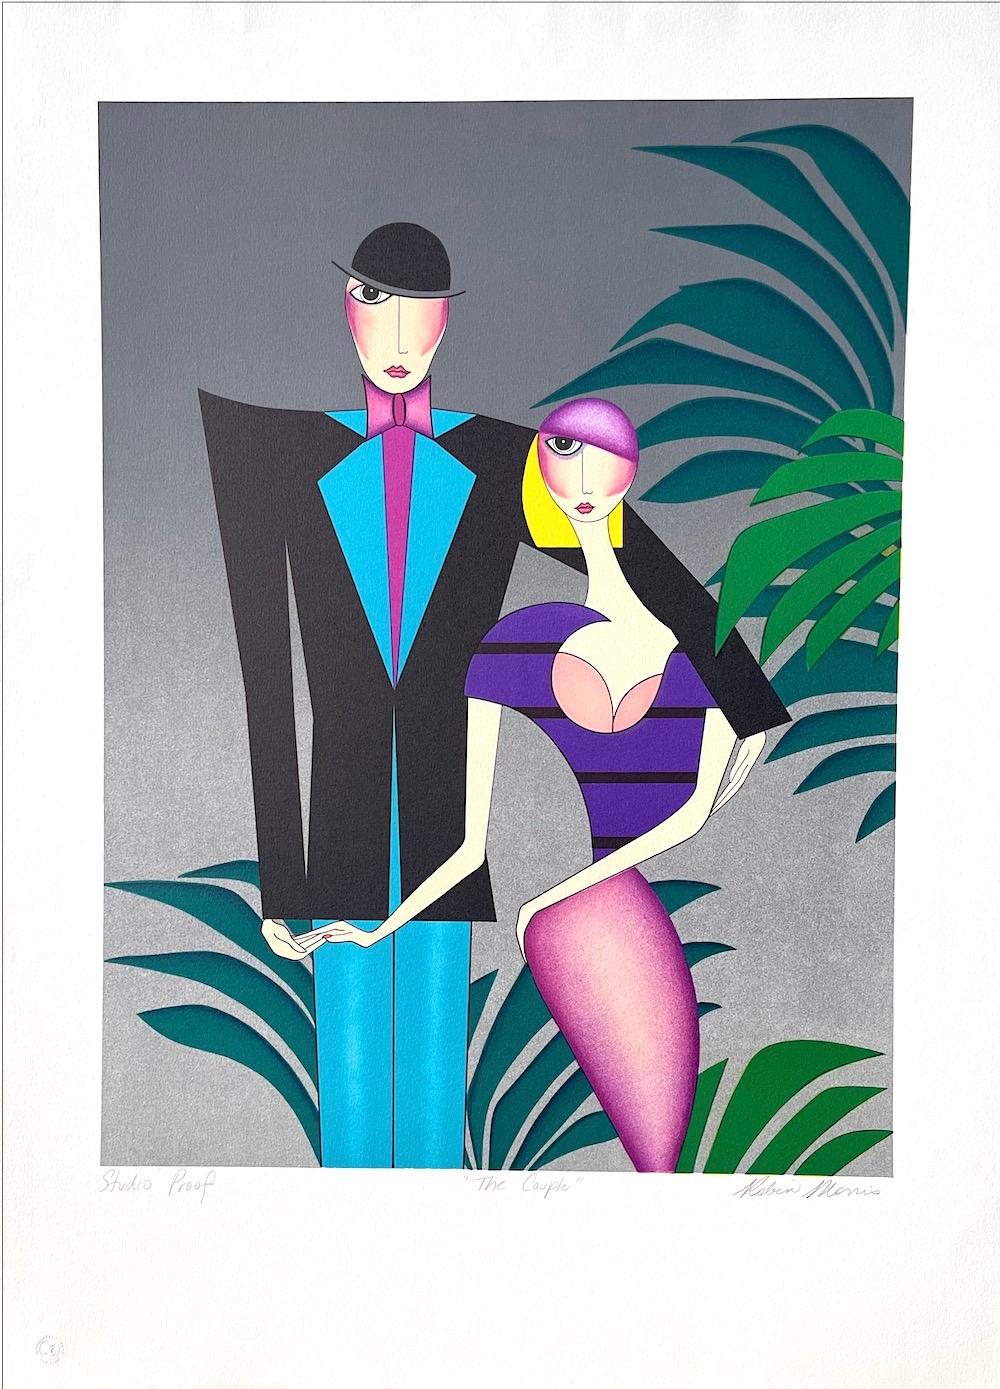 THE COUPLE Signed Lithograph, Art Deco Couple Portrait, 1920’s Flapper Fashion - Print by Robin Morris